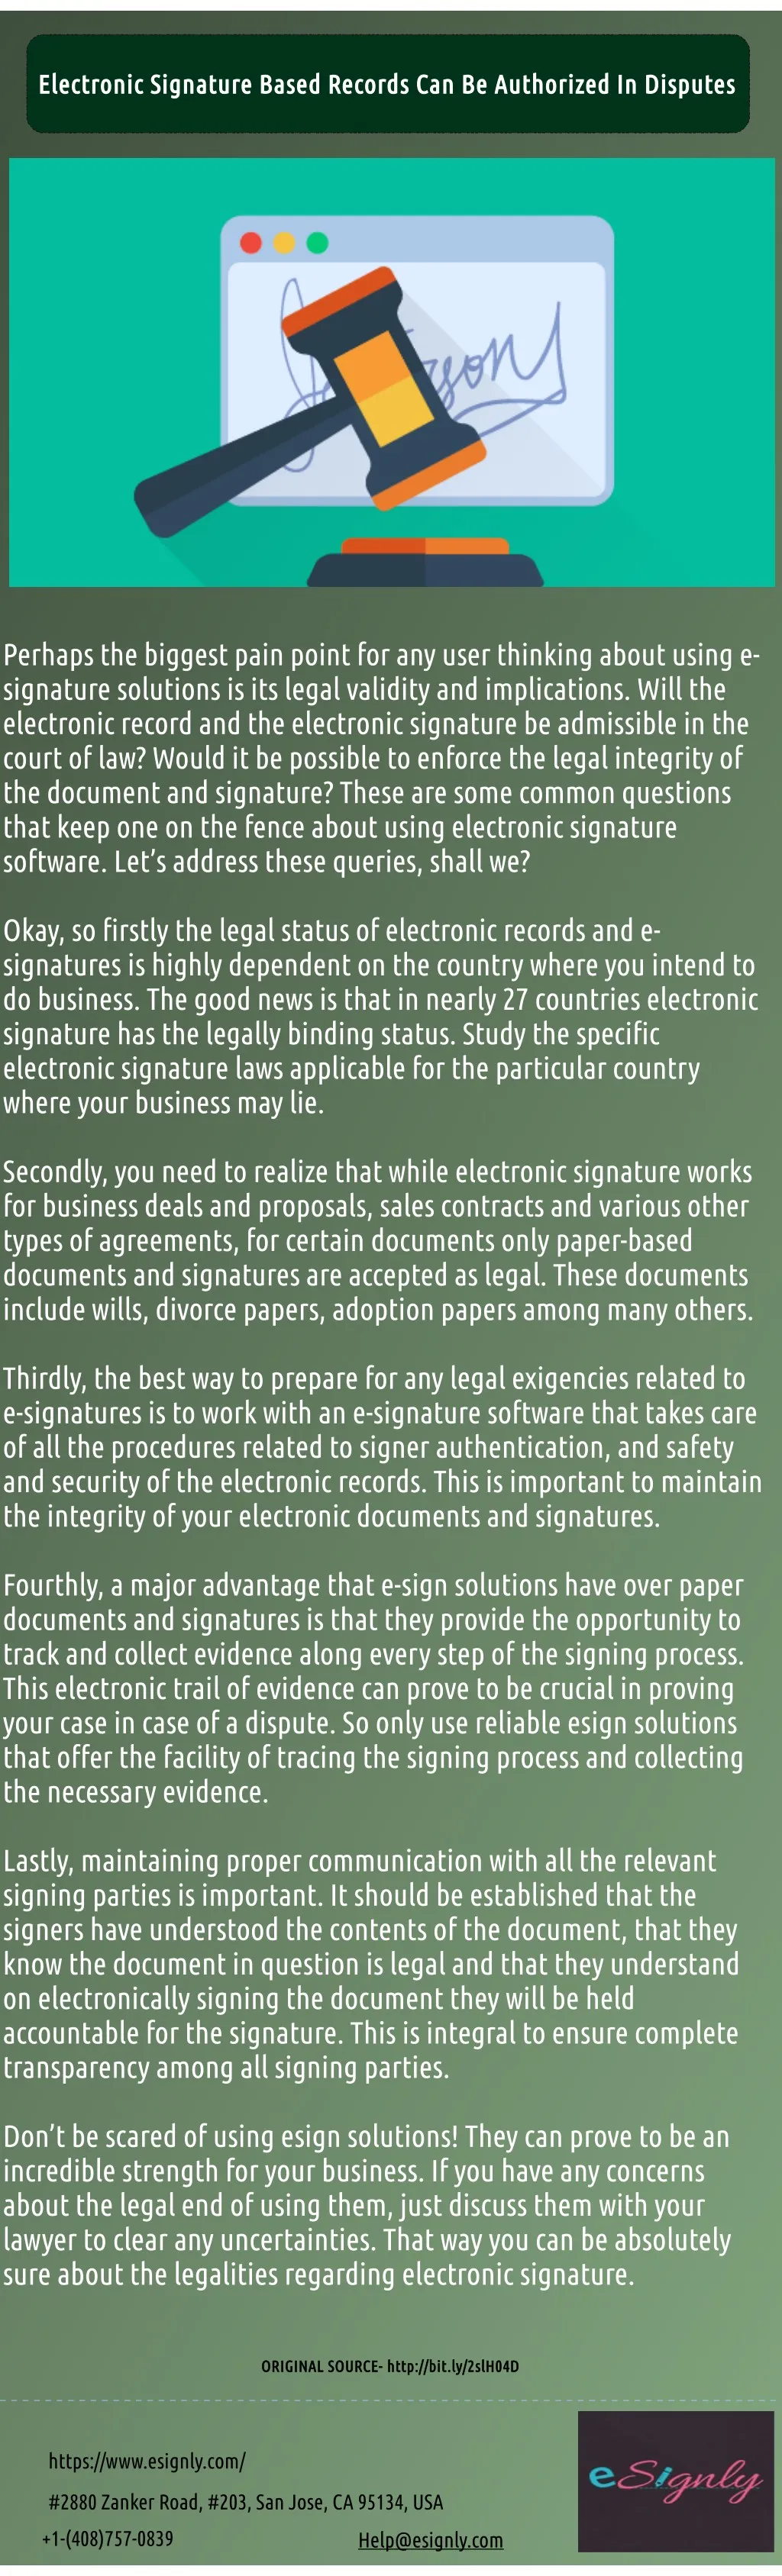 electronic signature based records